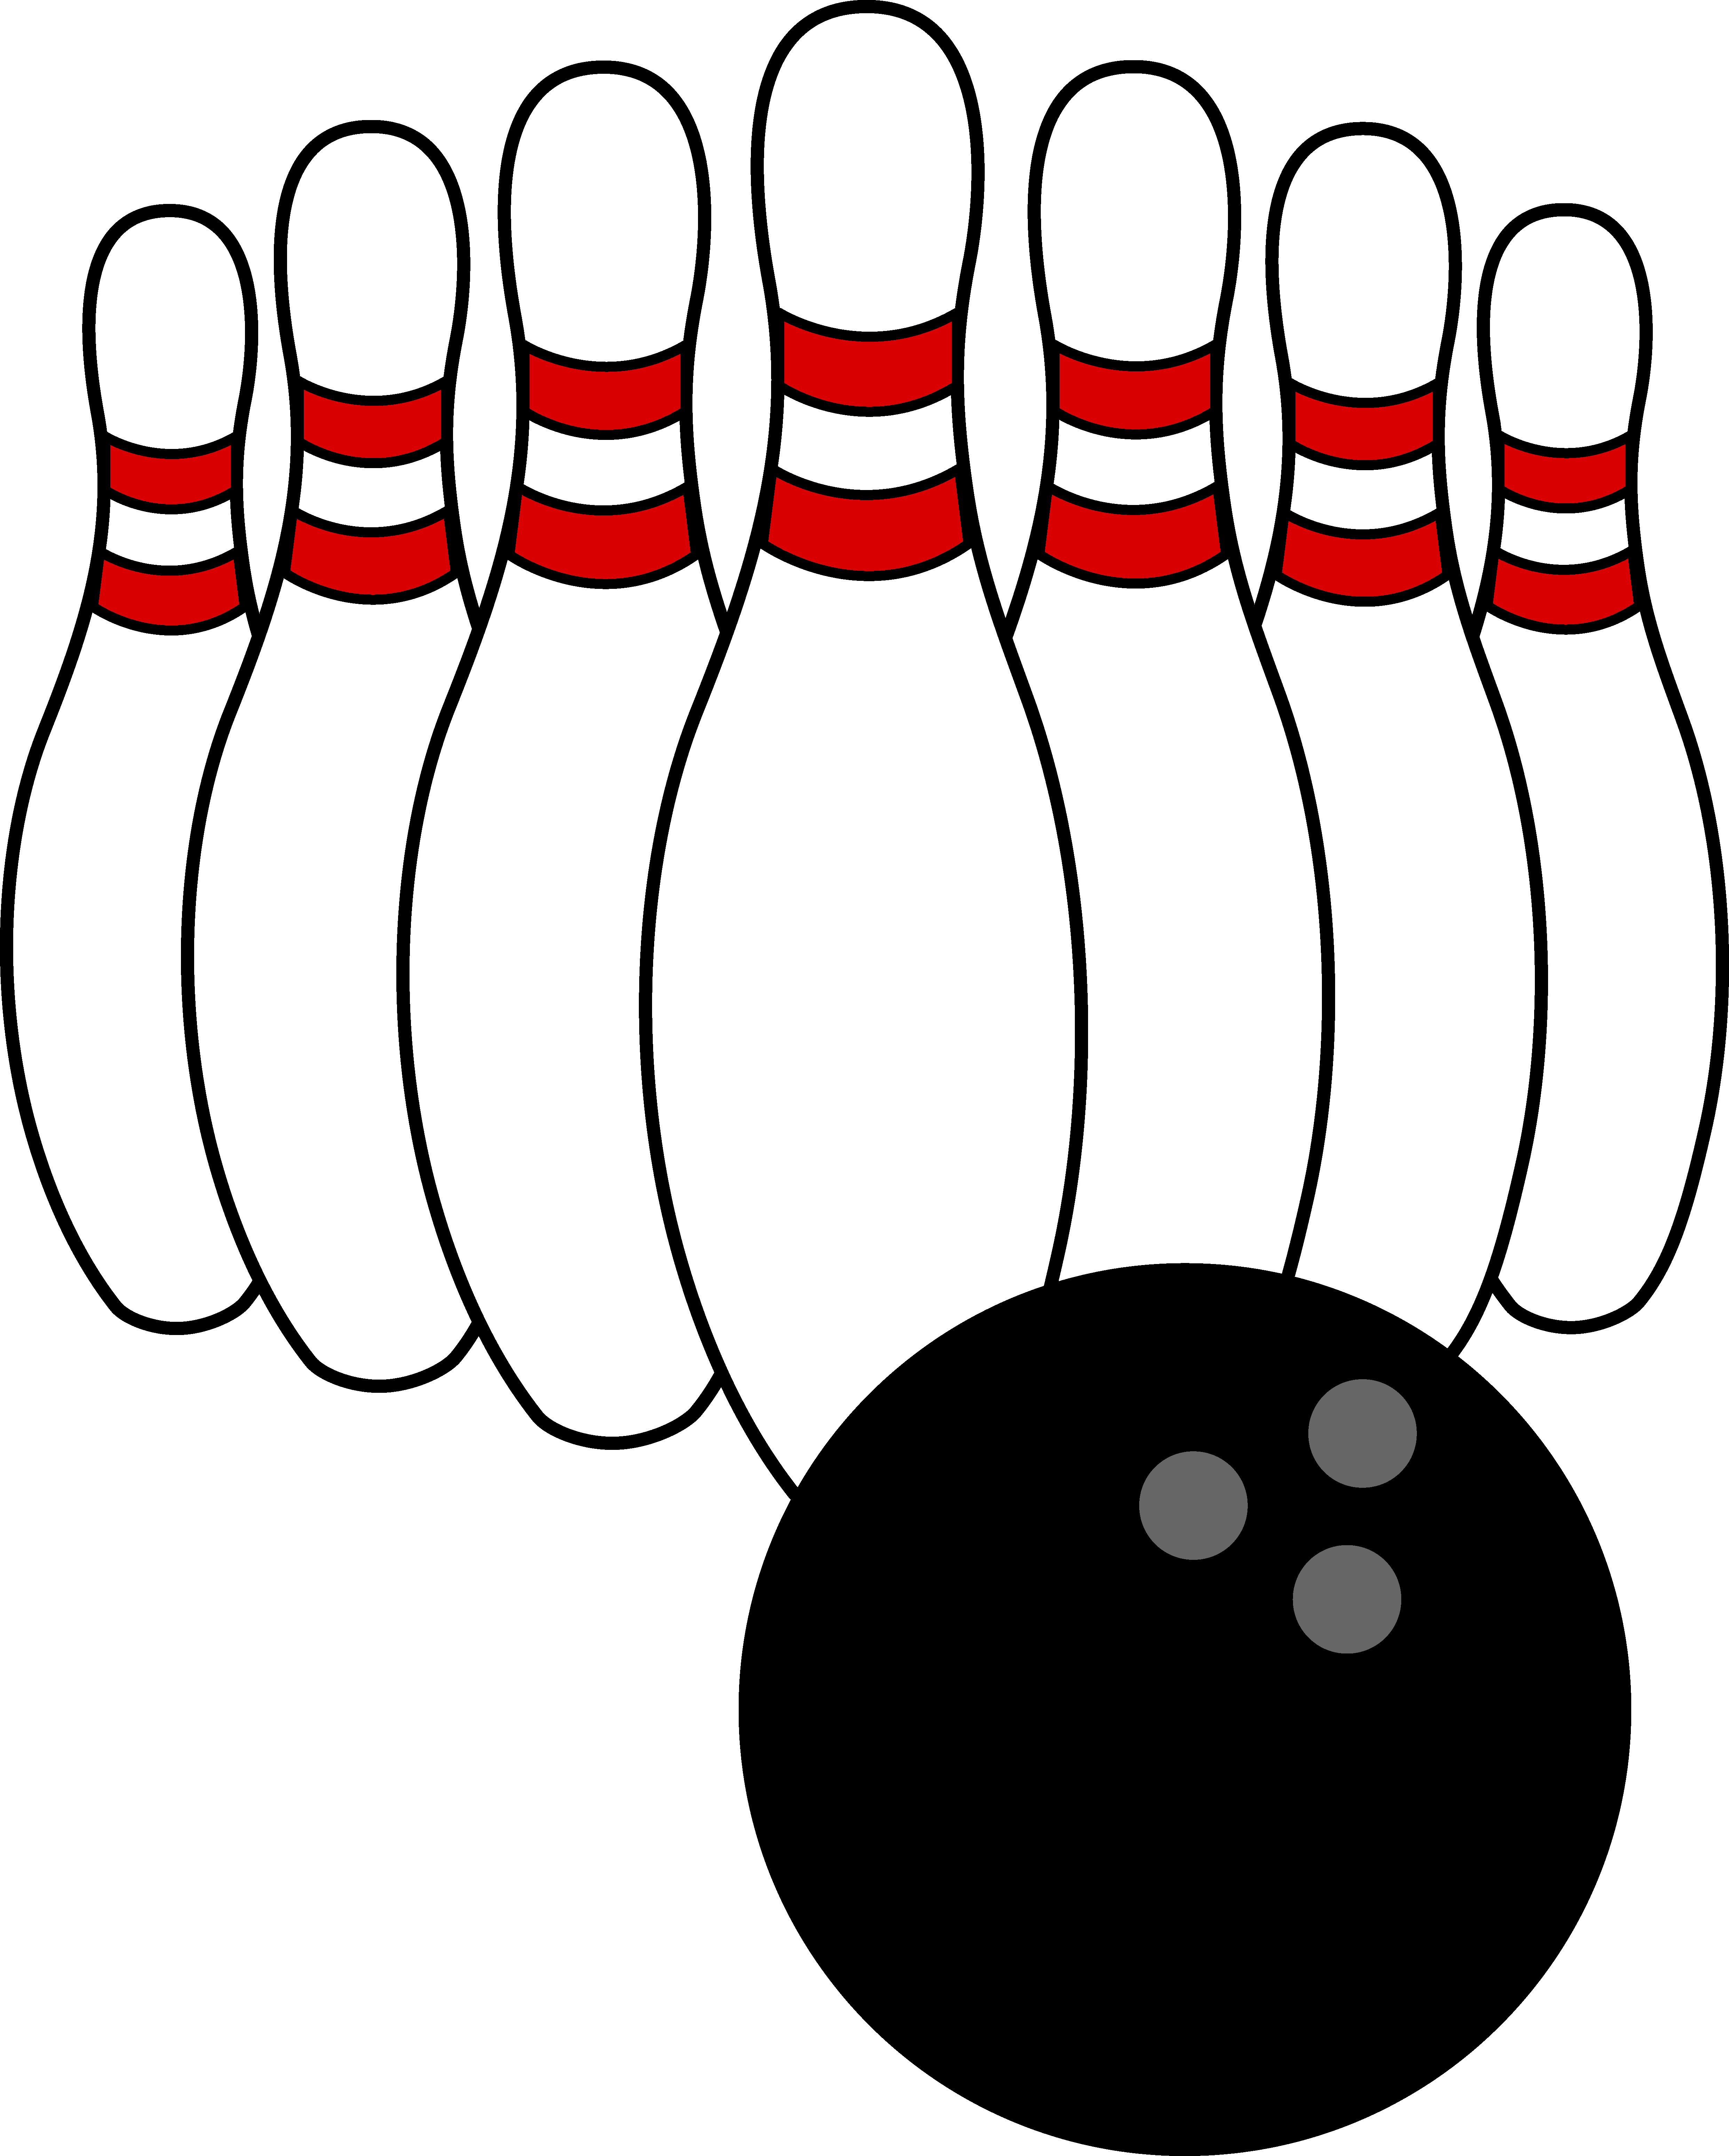 Bowling Ball and Pins Clip Art